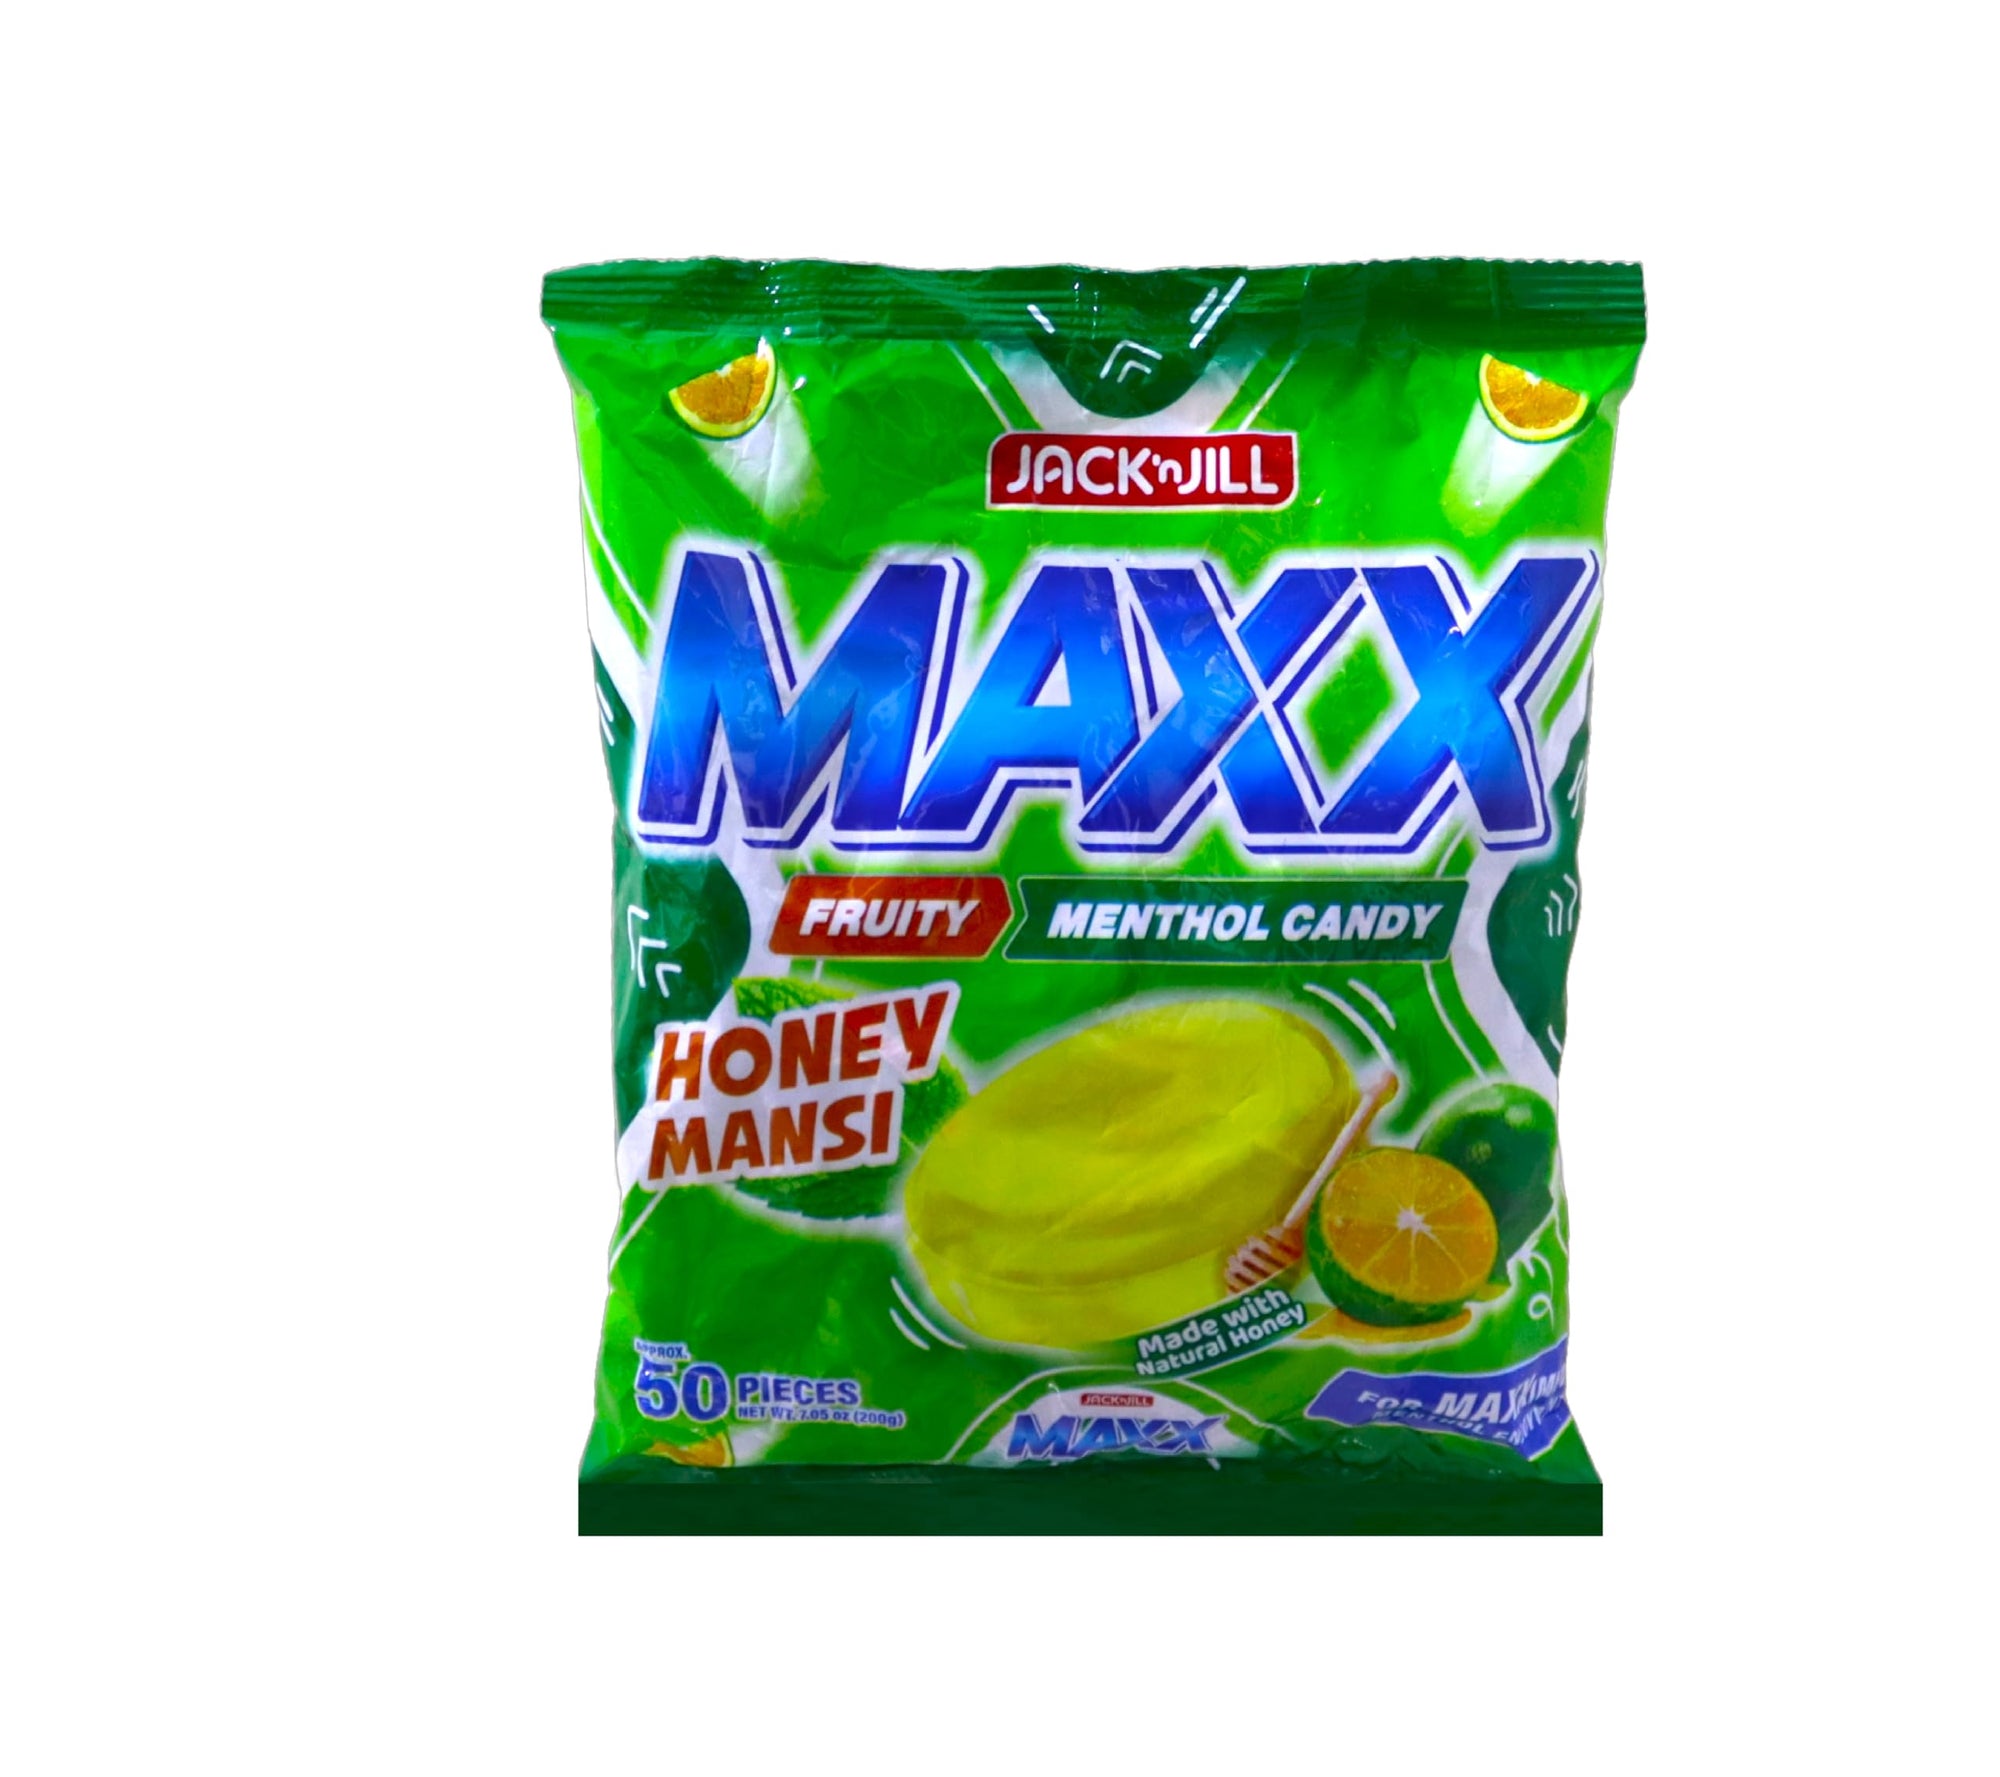 Jack'n Jill - Maxx Honey Mansi Menthol Candy Pack of 3 Net Wt 21.15 Oz